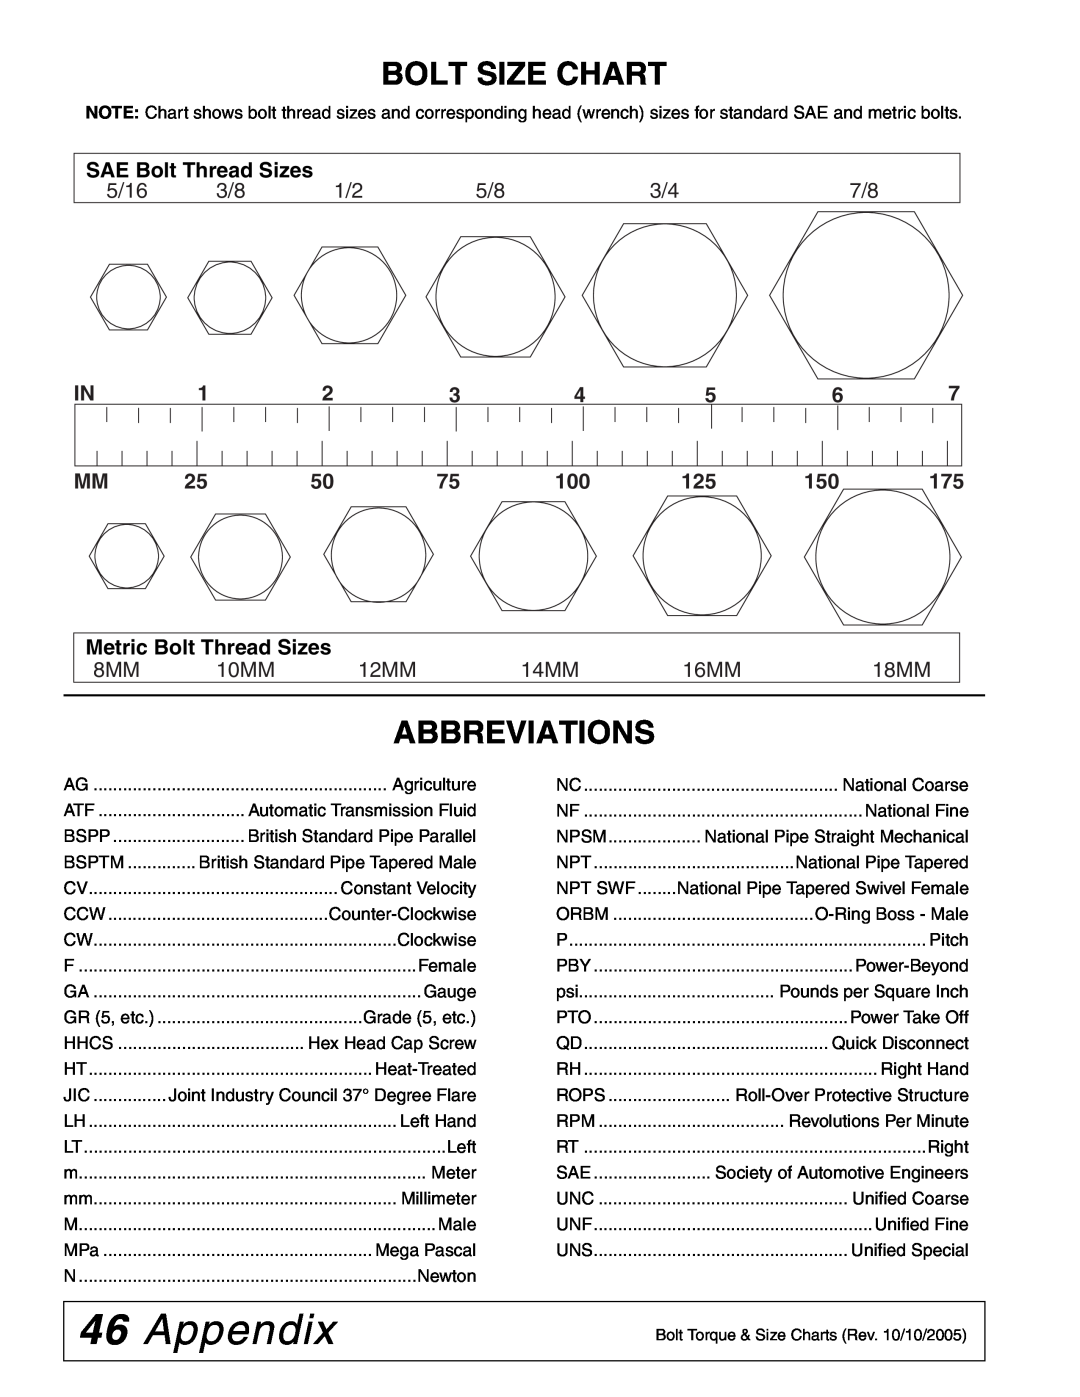 Woods Equipment L59A-3 Appendix, Bolt Size Chart, Abbreviations, SAE Bolt Thread Sizes, 5/16, Metric Bolt Thread Sizes 